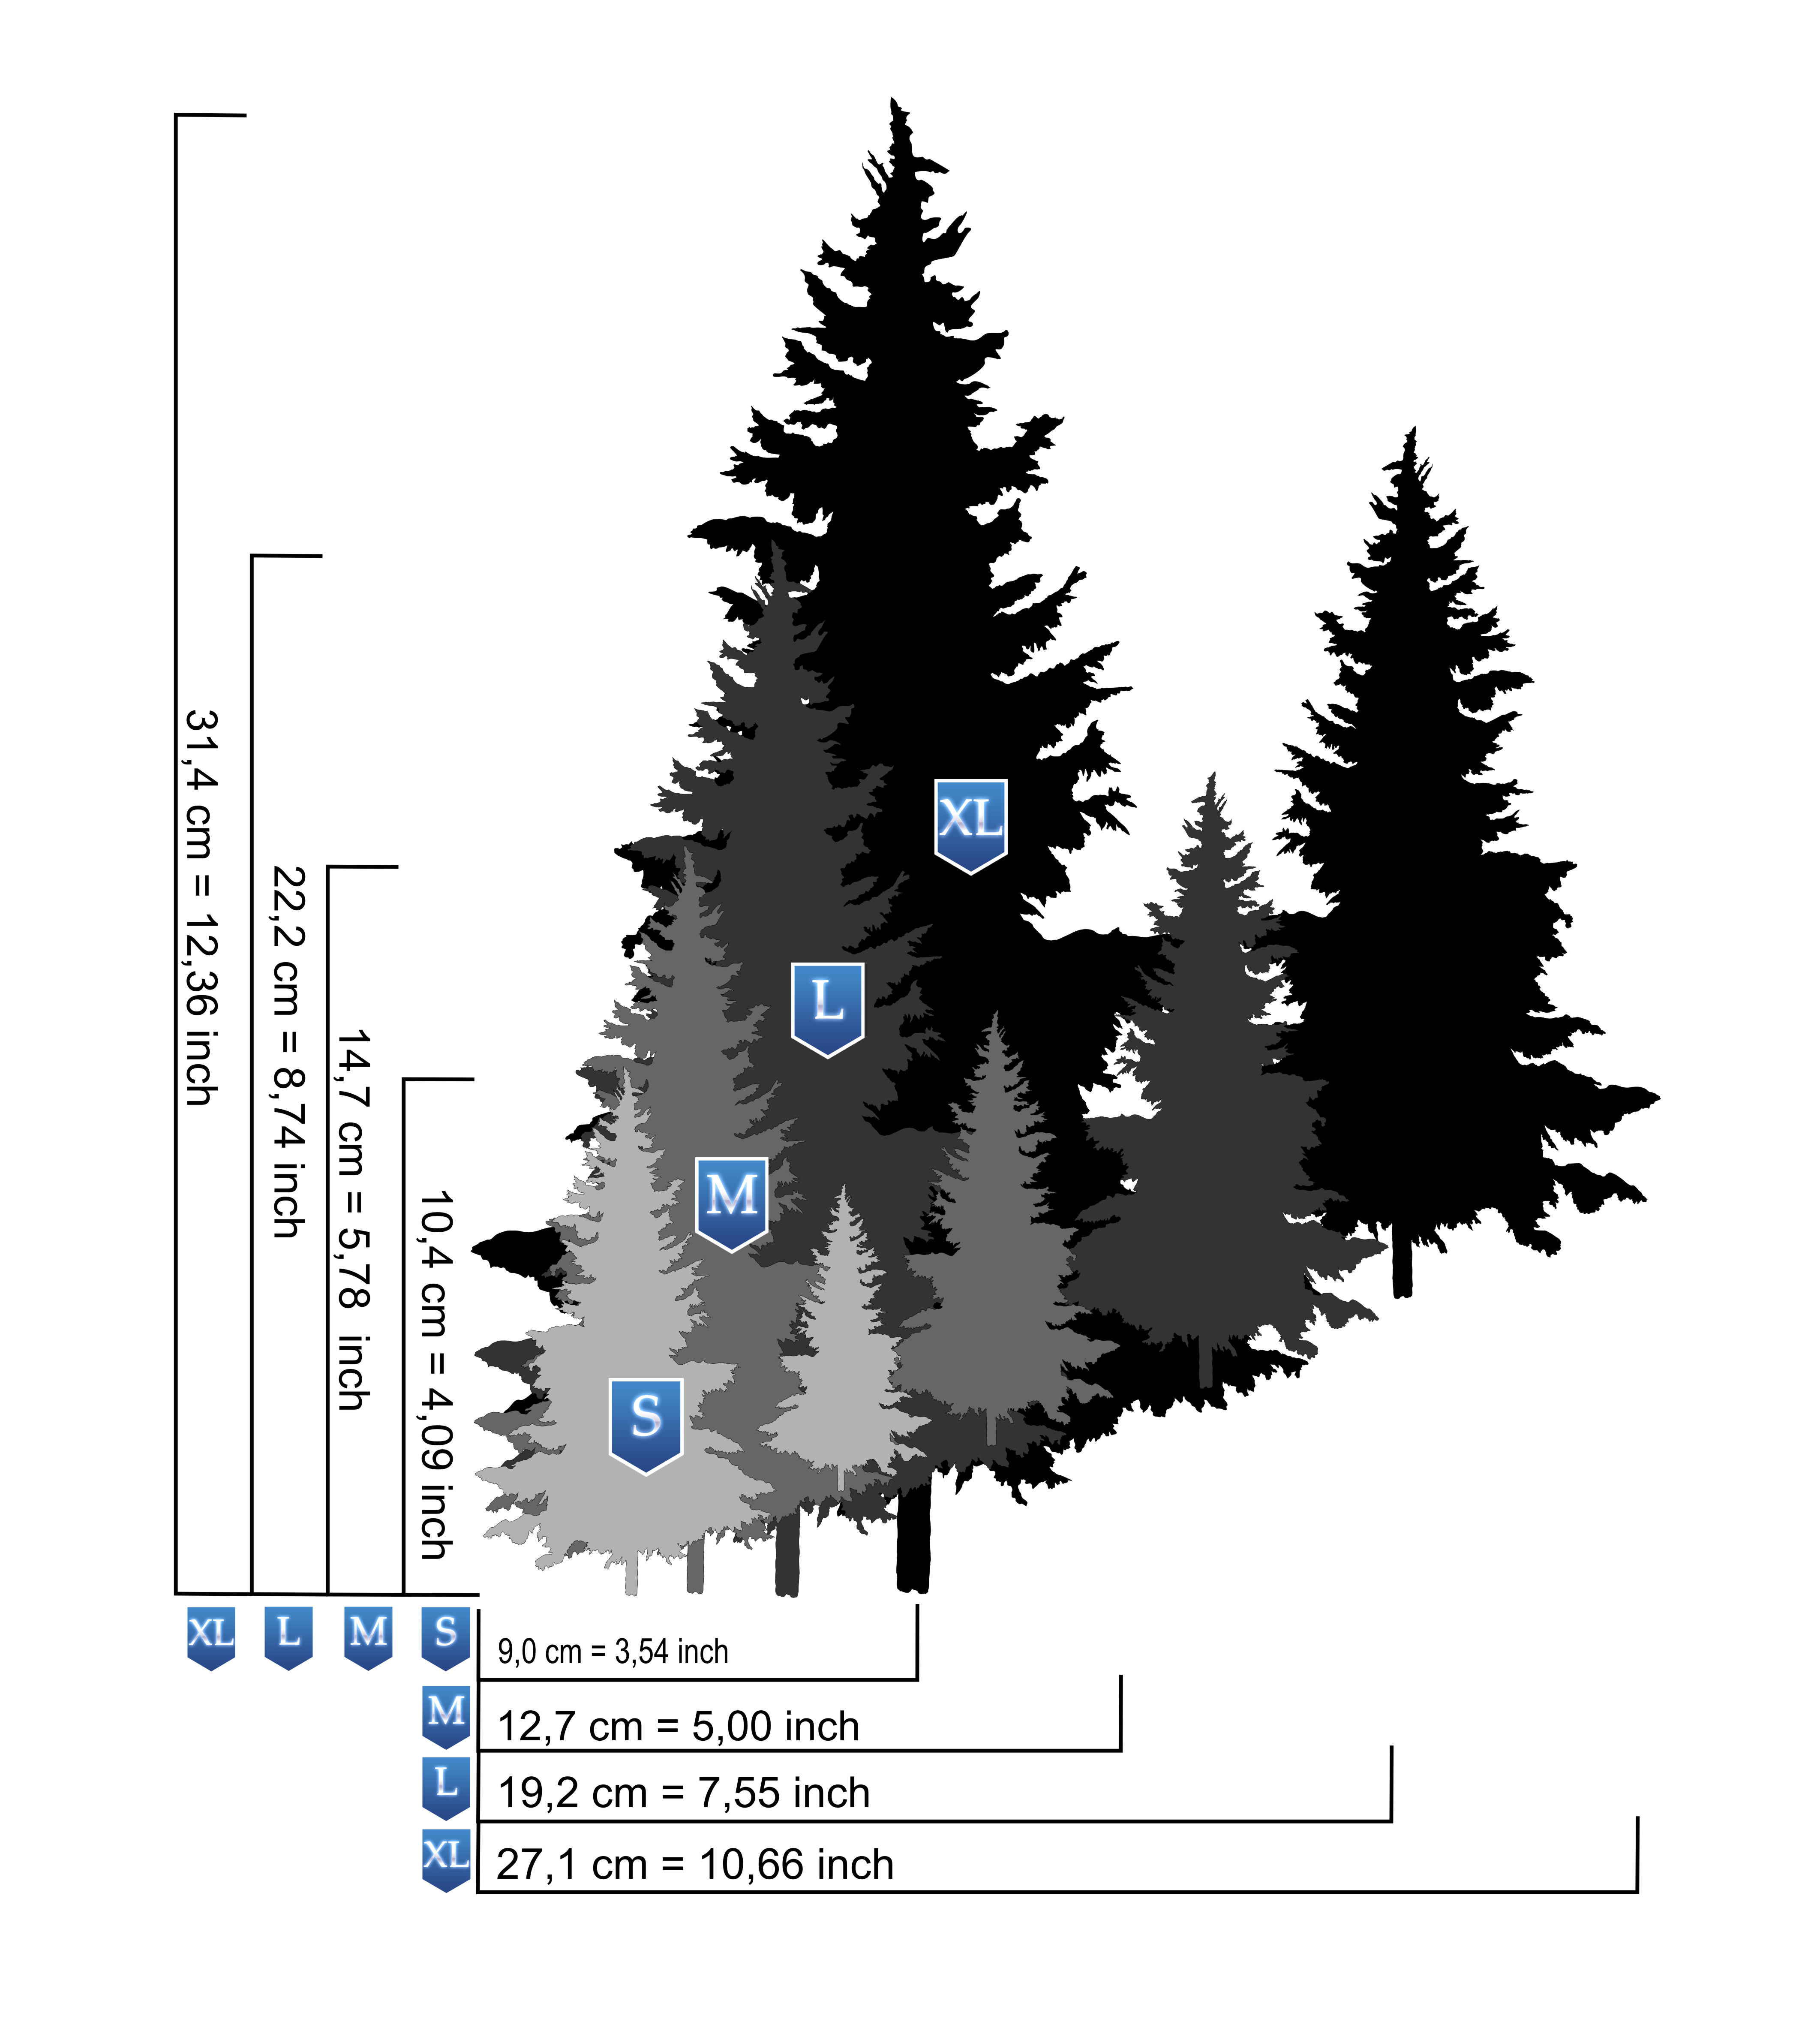 AS-353 Schnee Tannen / Snow fir trees Step by Step Airbrushschablone XL